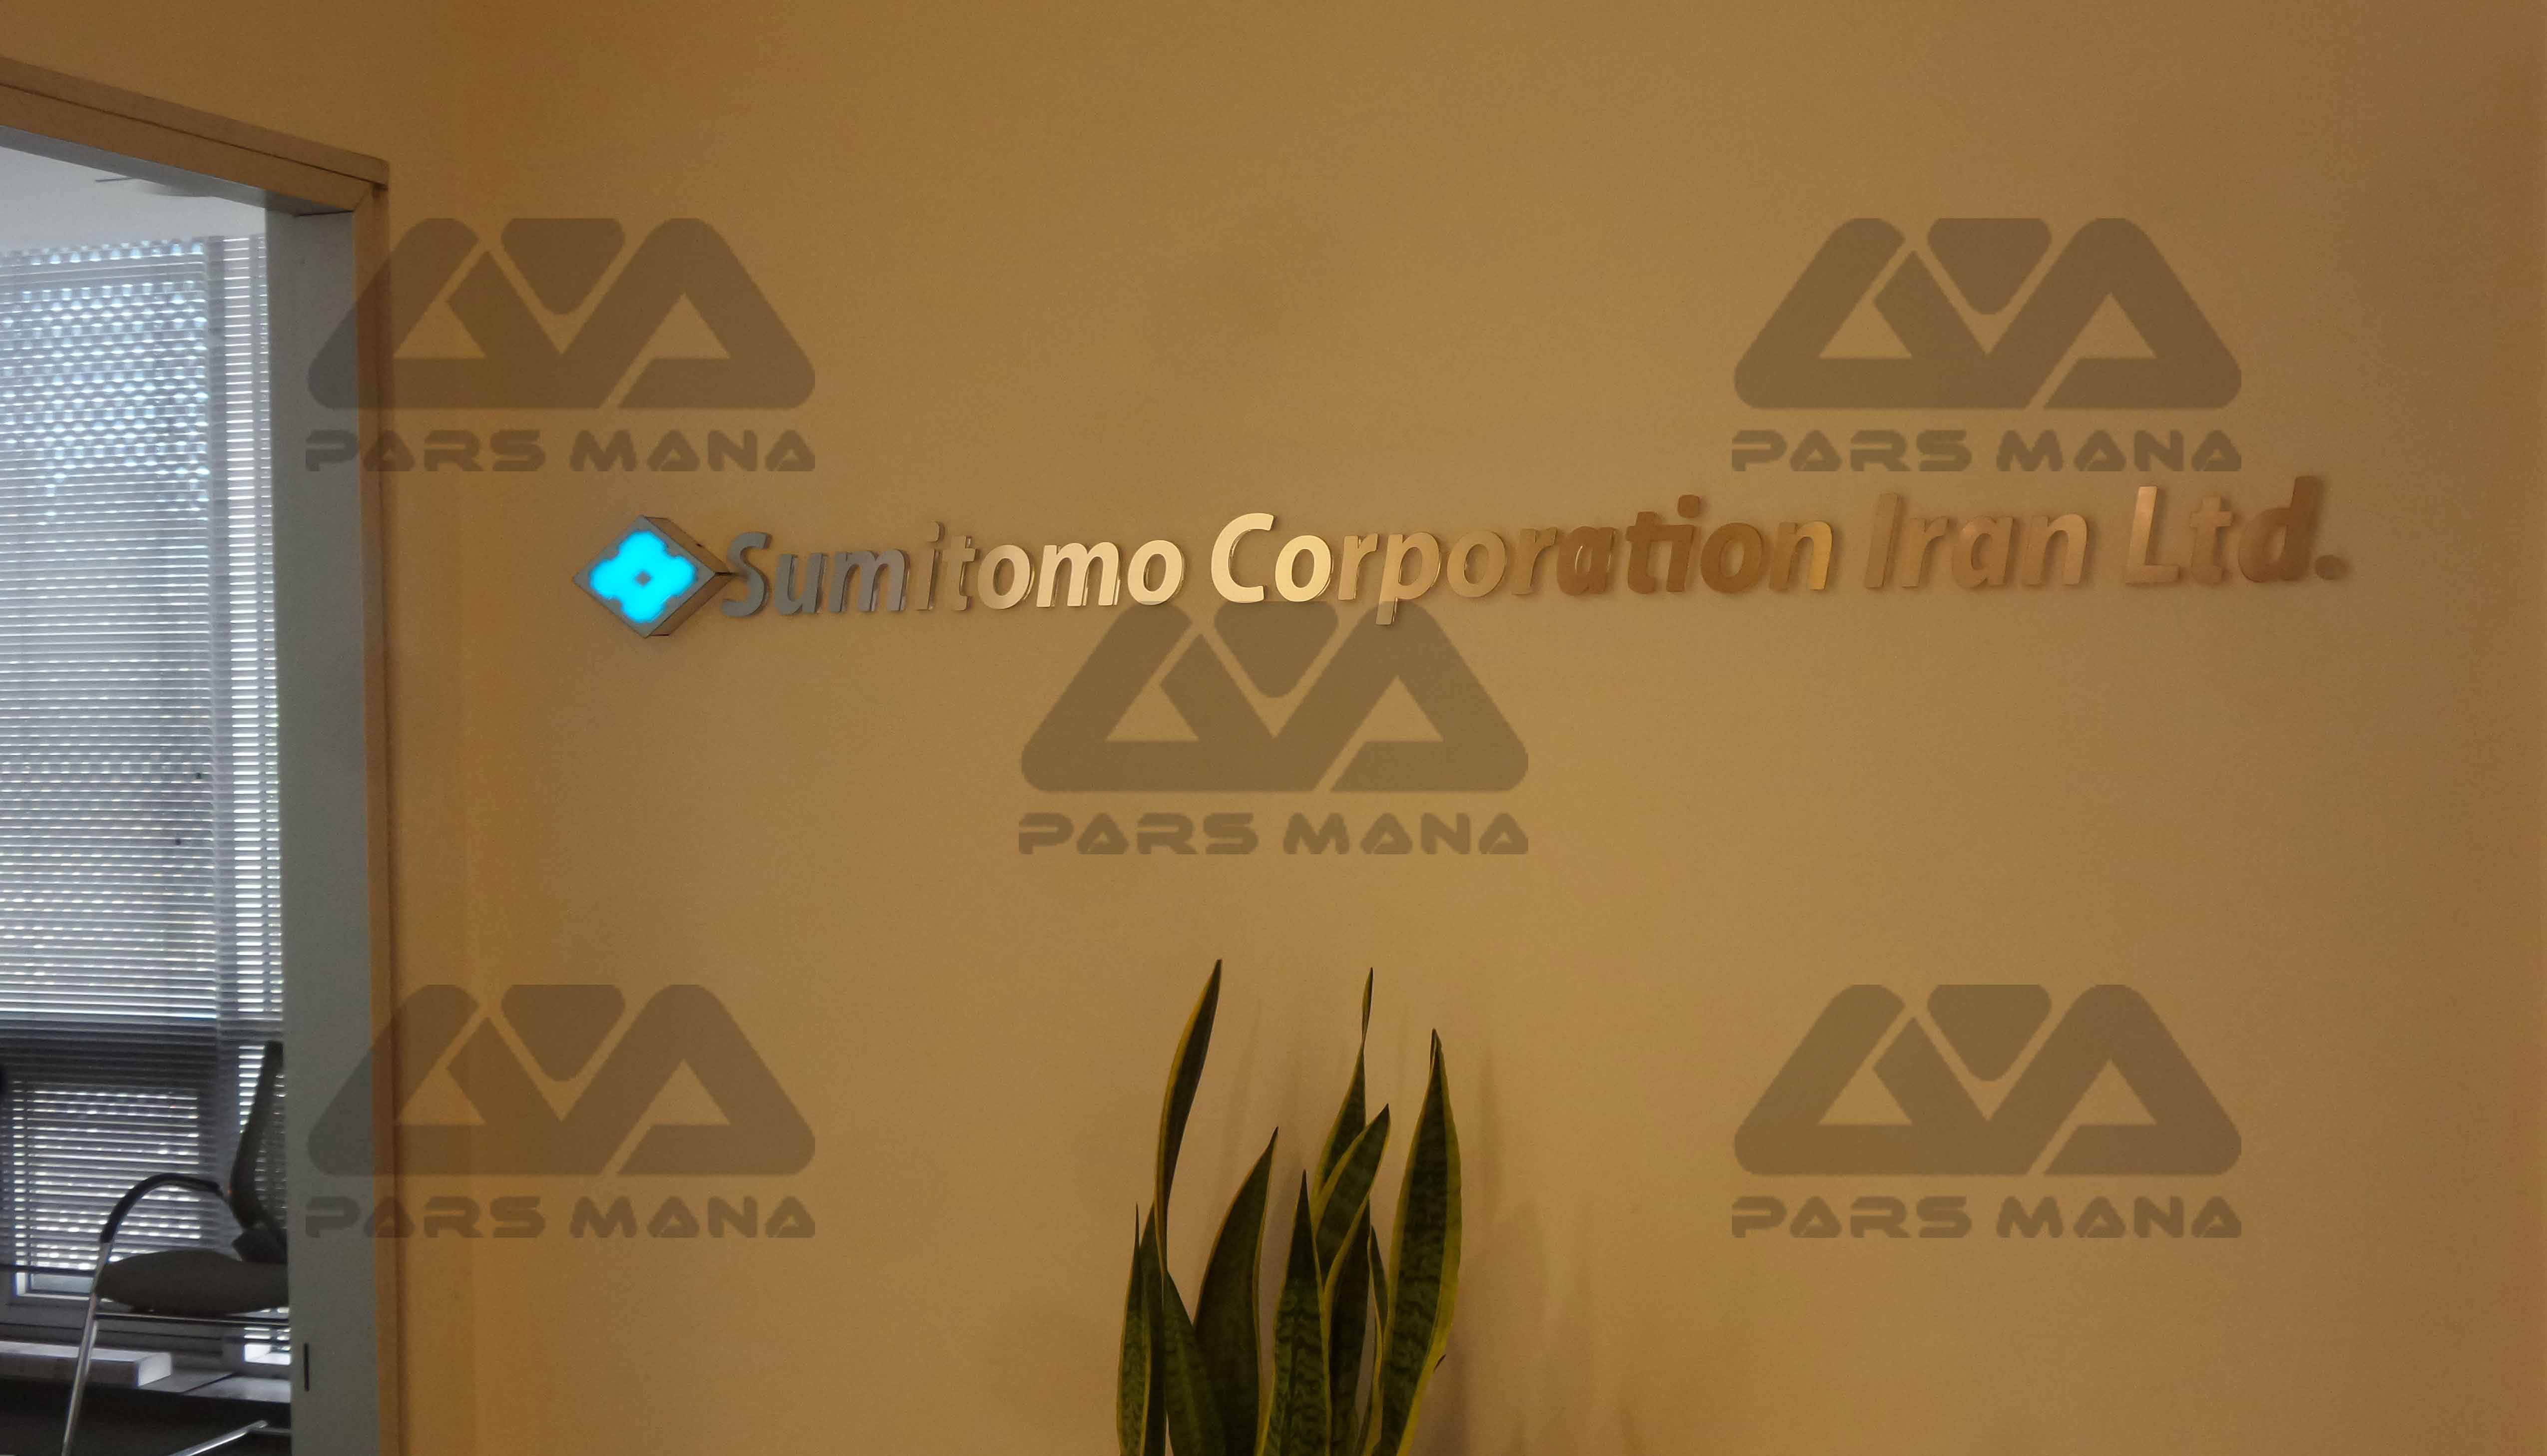 Sumitomo Corporation Iran Ltd